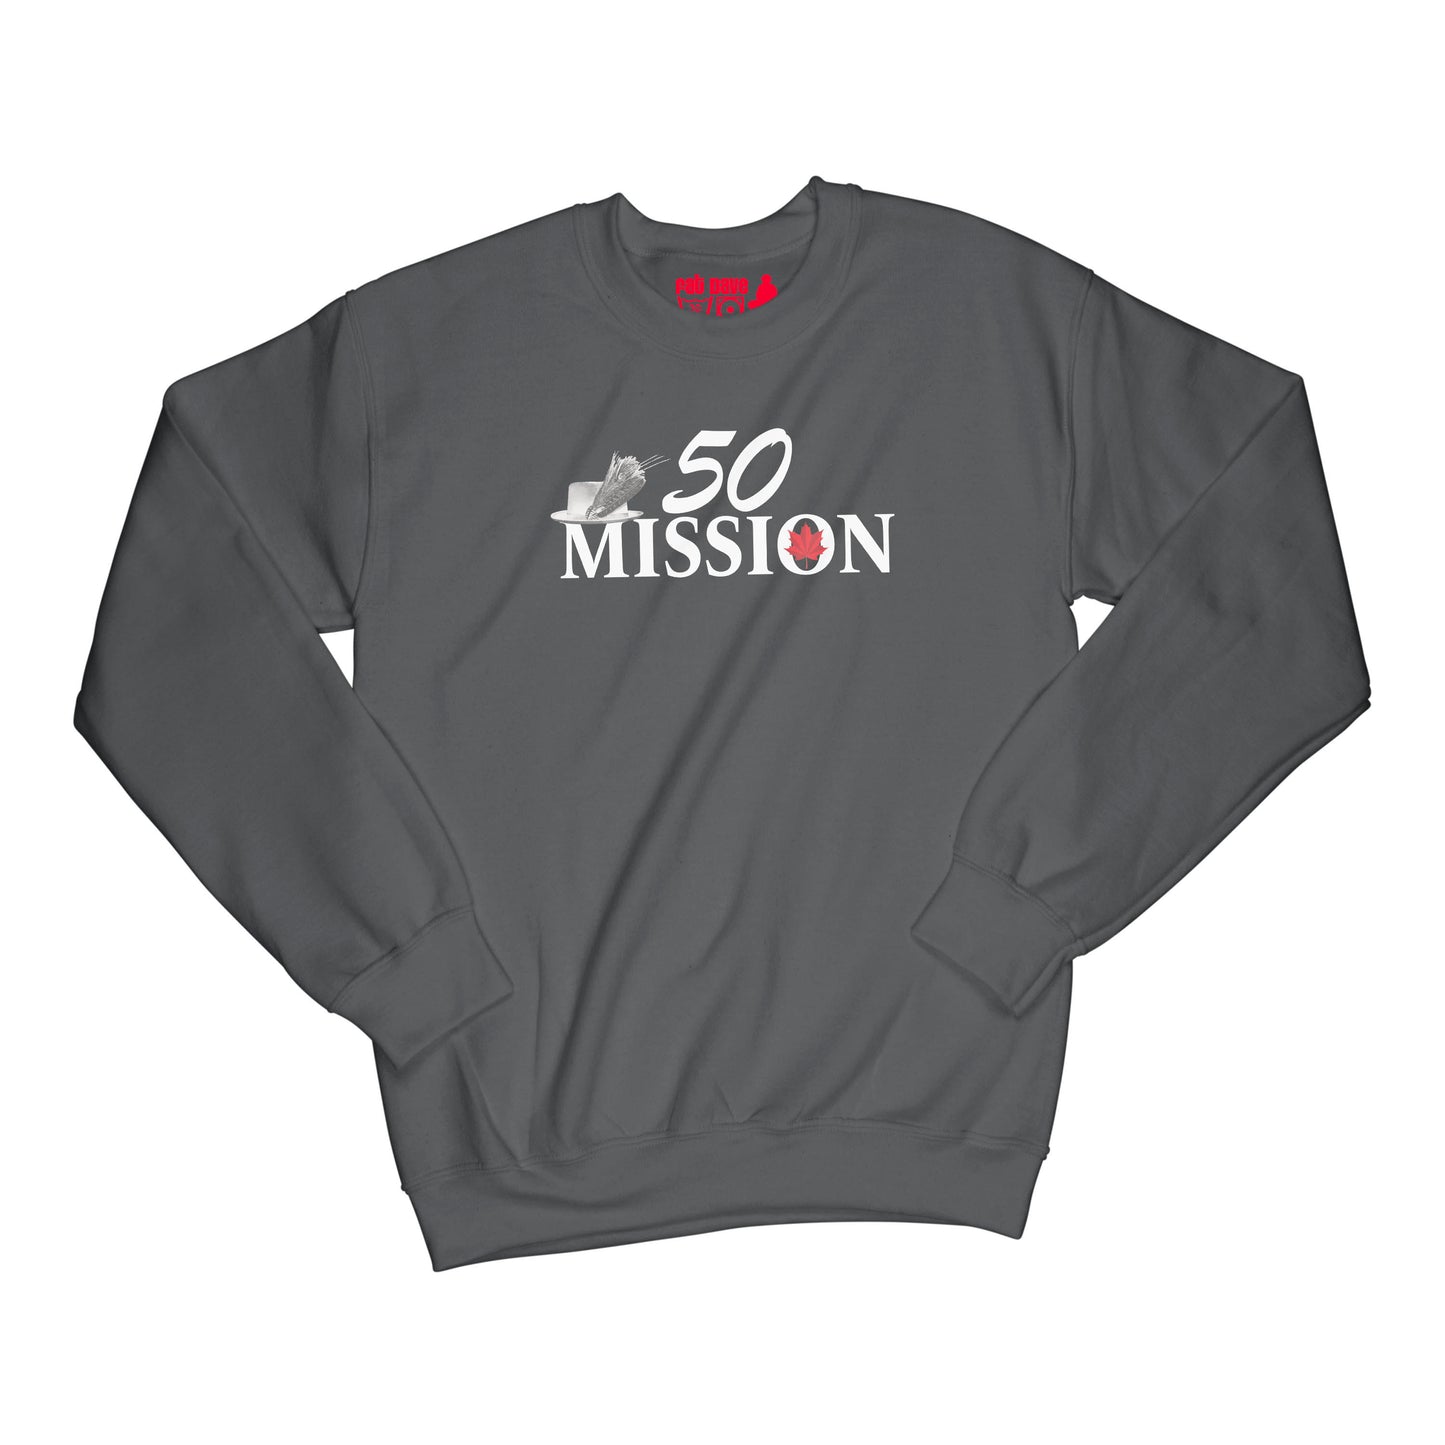 50 Mission band logo Sweatshirt